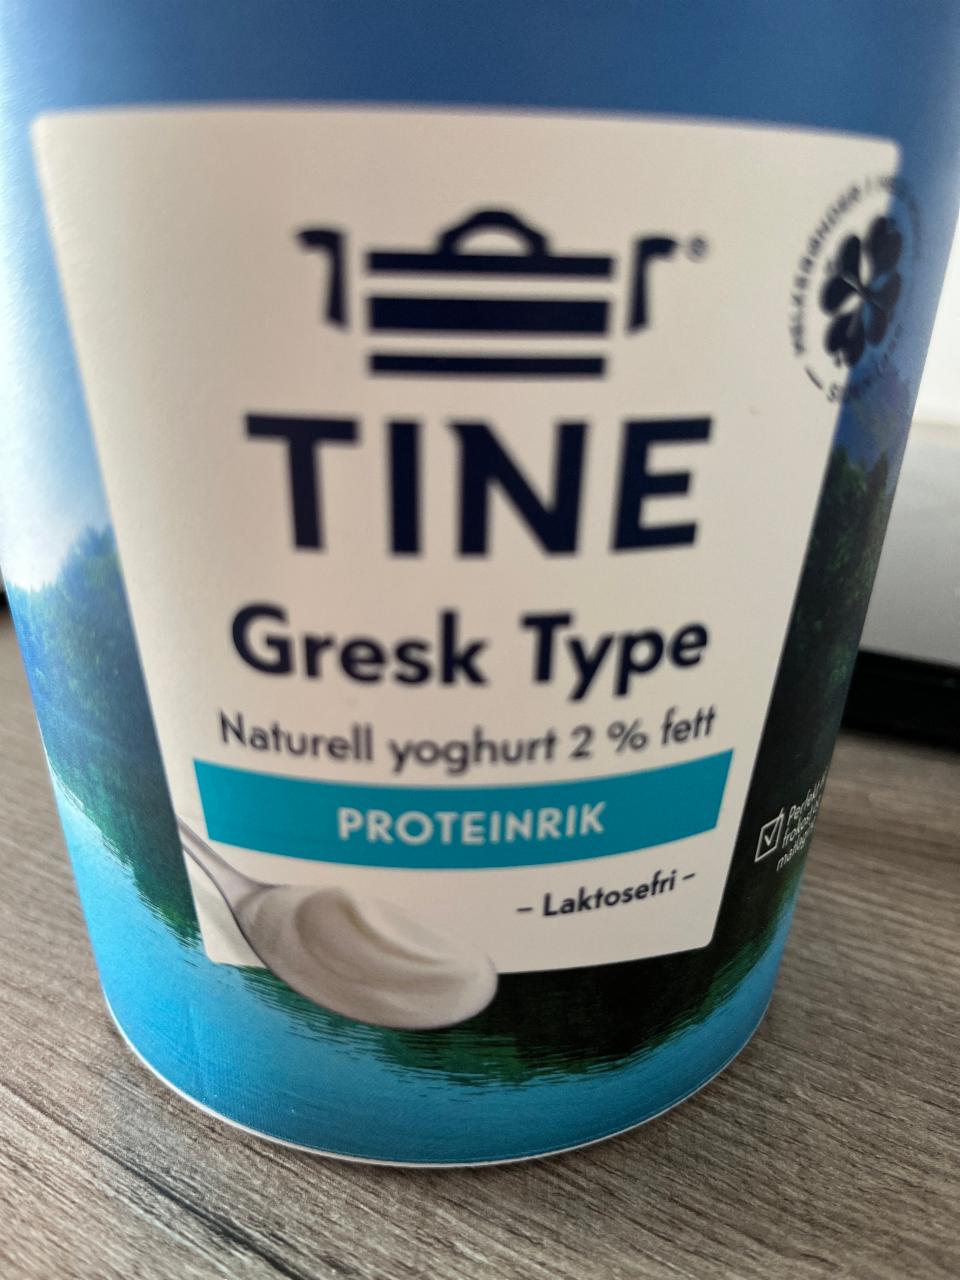 Fotografie - Bíly jogurt Gresk type 2% tuk Tine